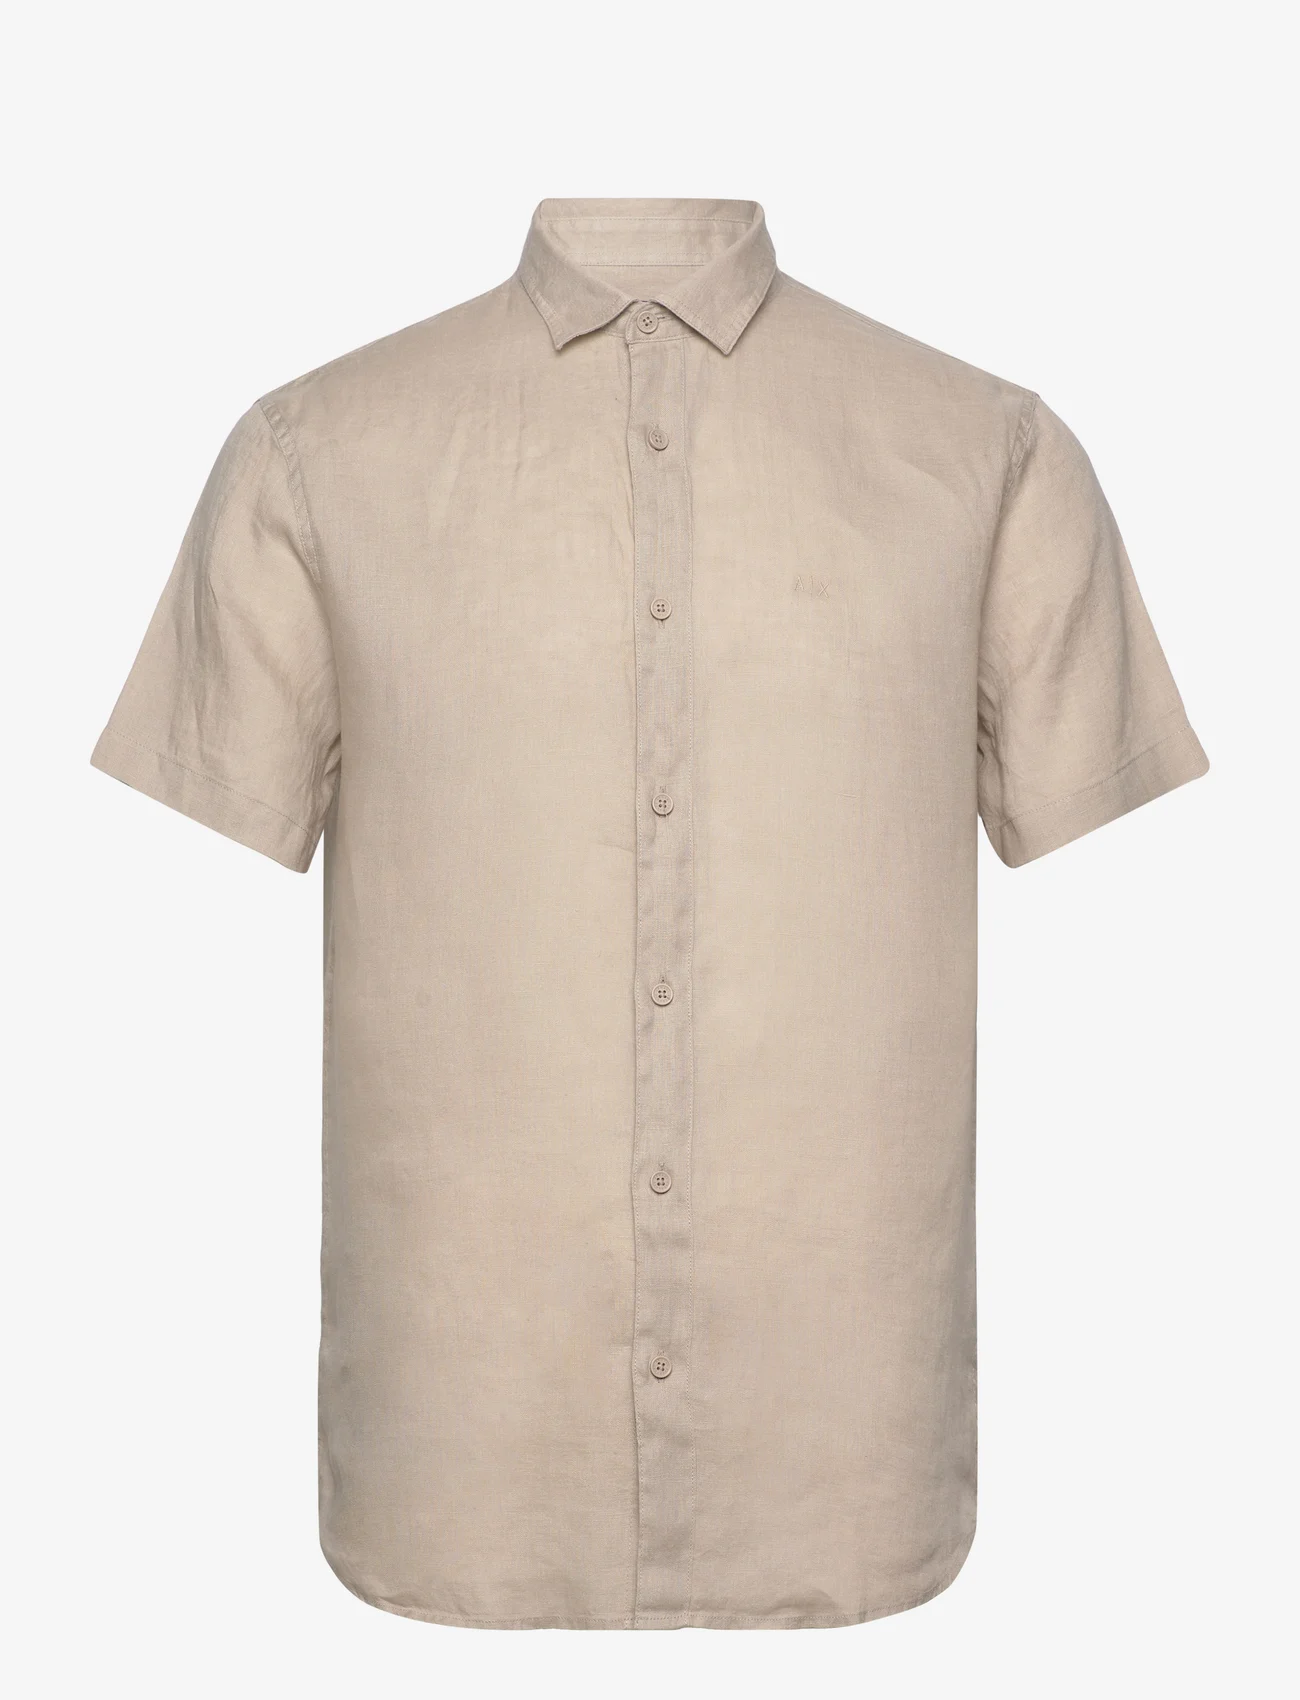 Armani Exchange - SHIRT - linen shirts - 1724-pure cashmere - 0